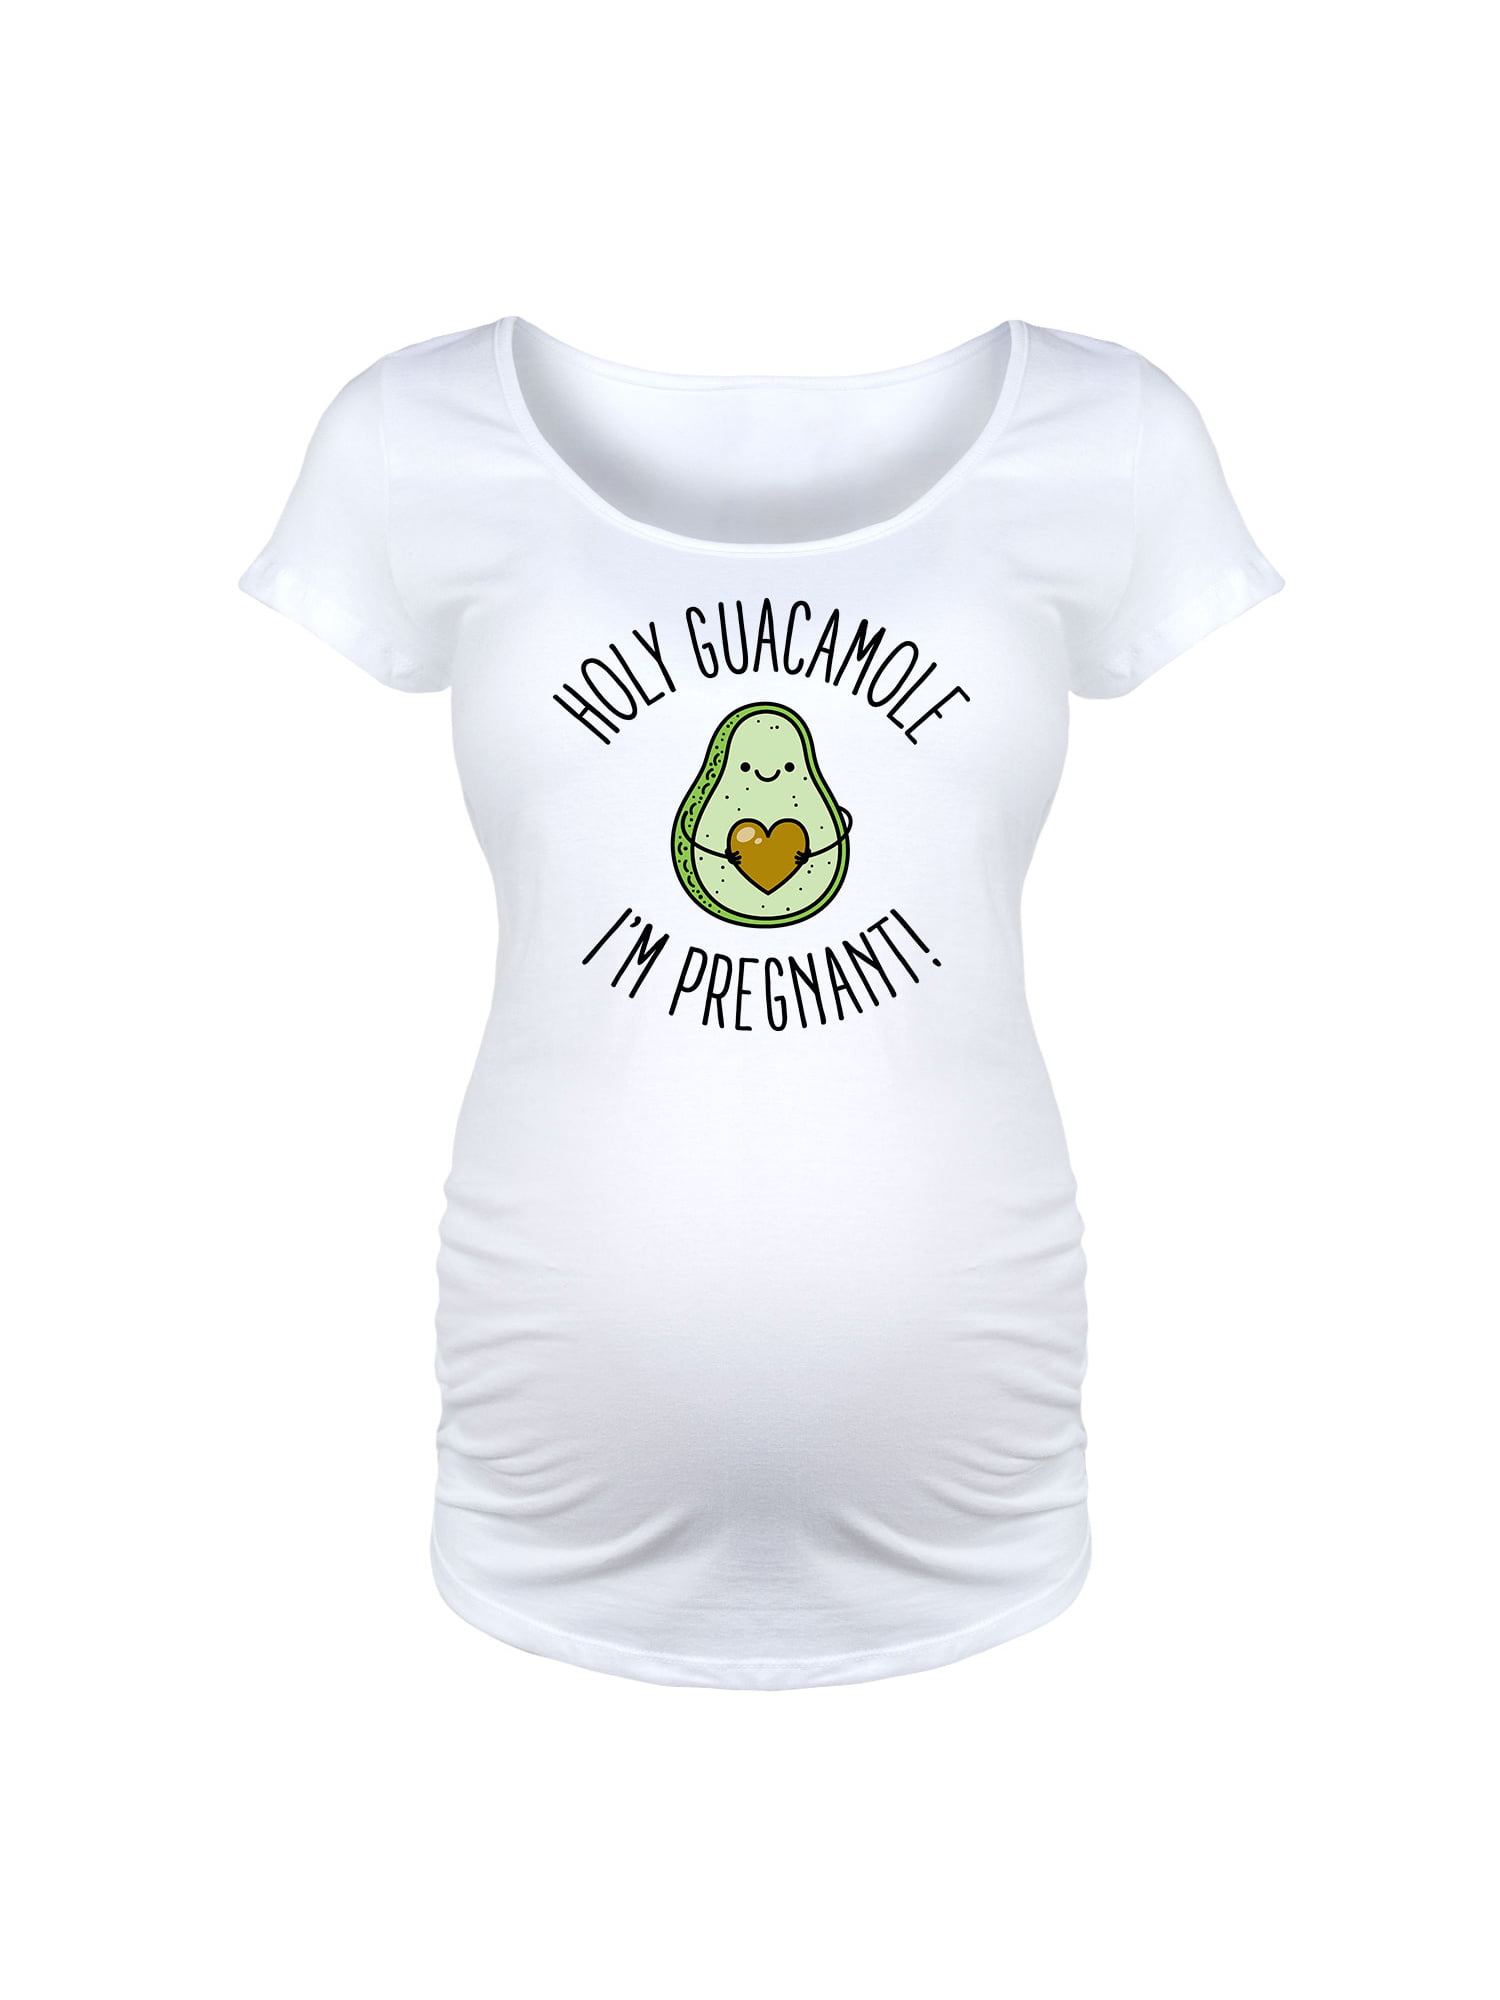 green bay packers pregnancy shirt